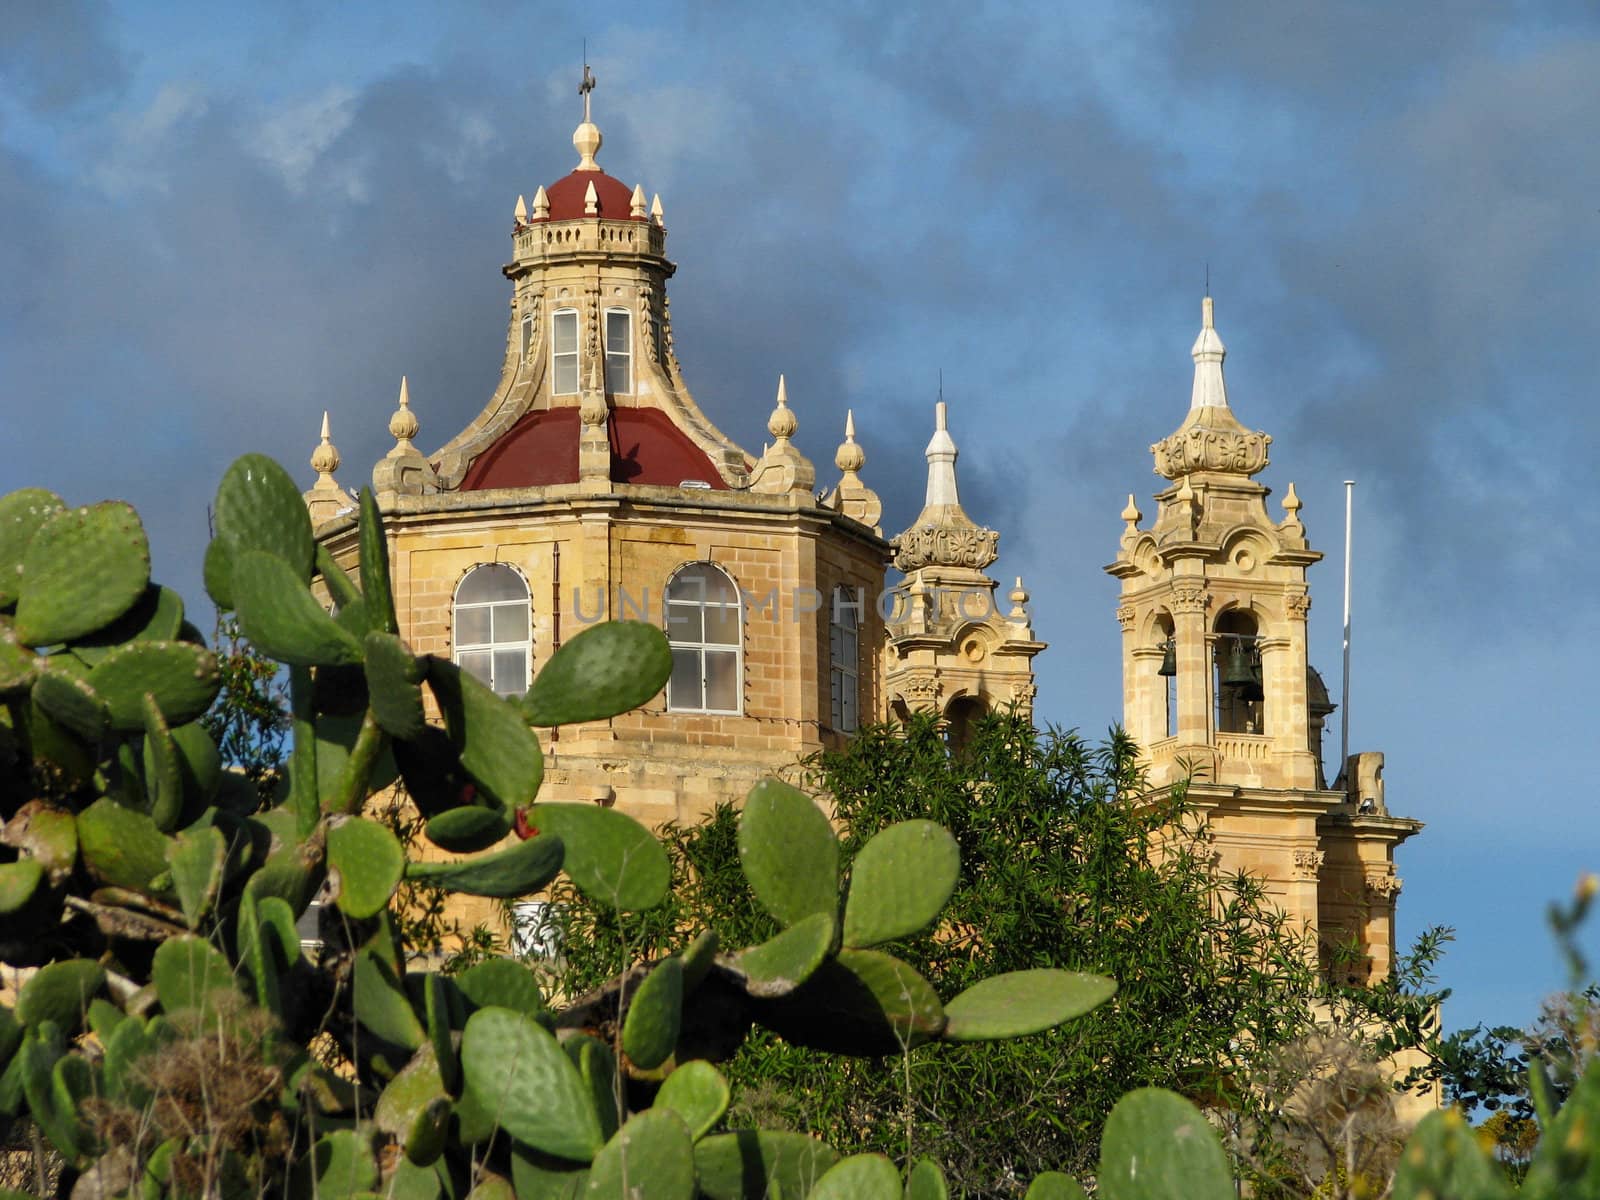 Saint Anthony's chapel in Marsalforn, Gozo - Malta.